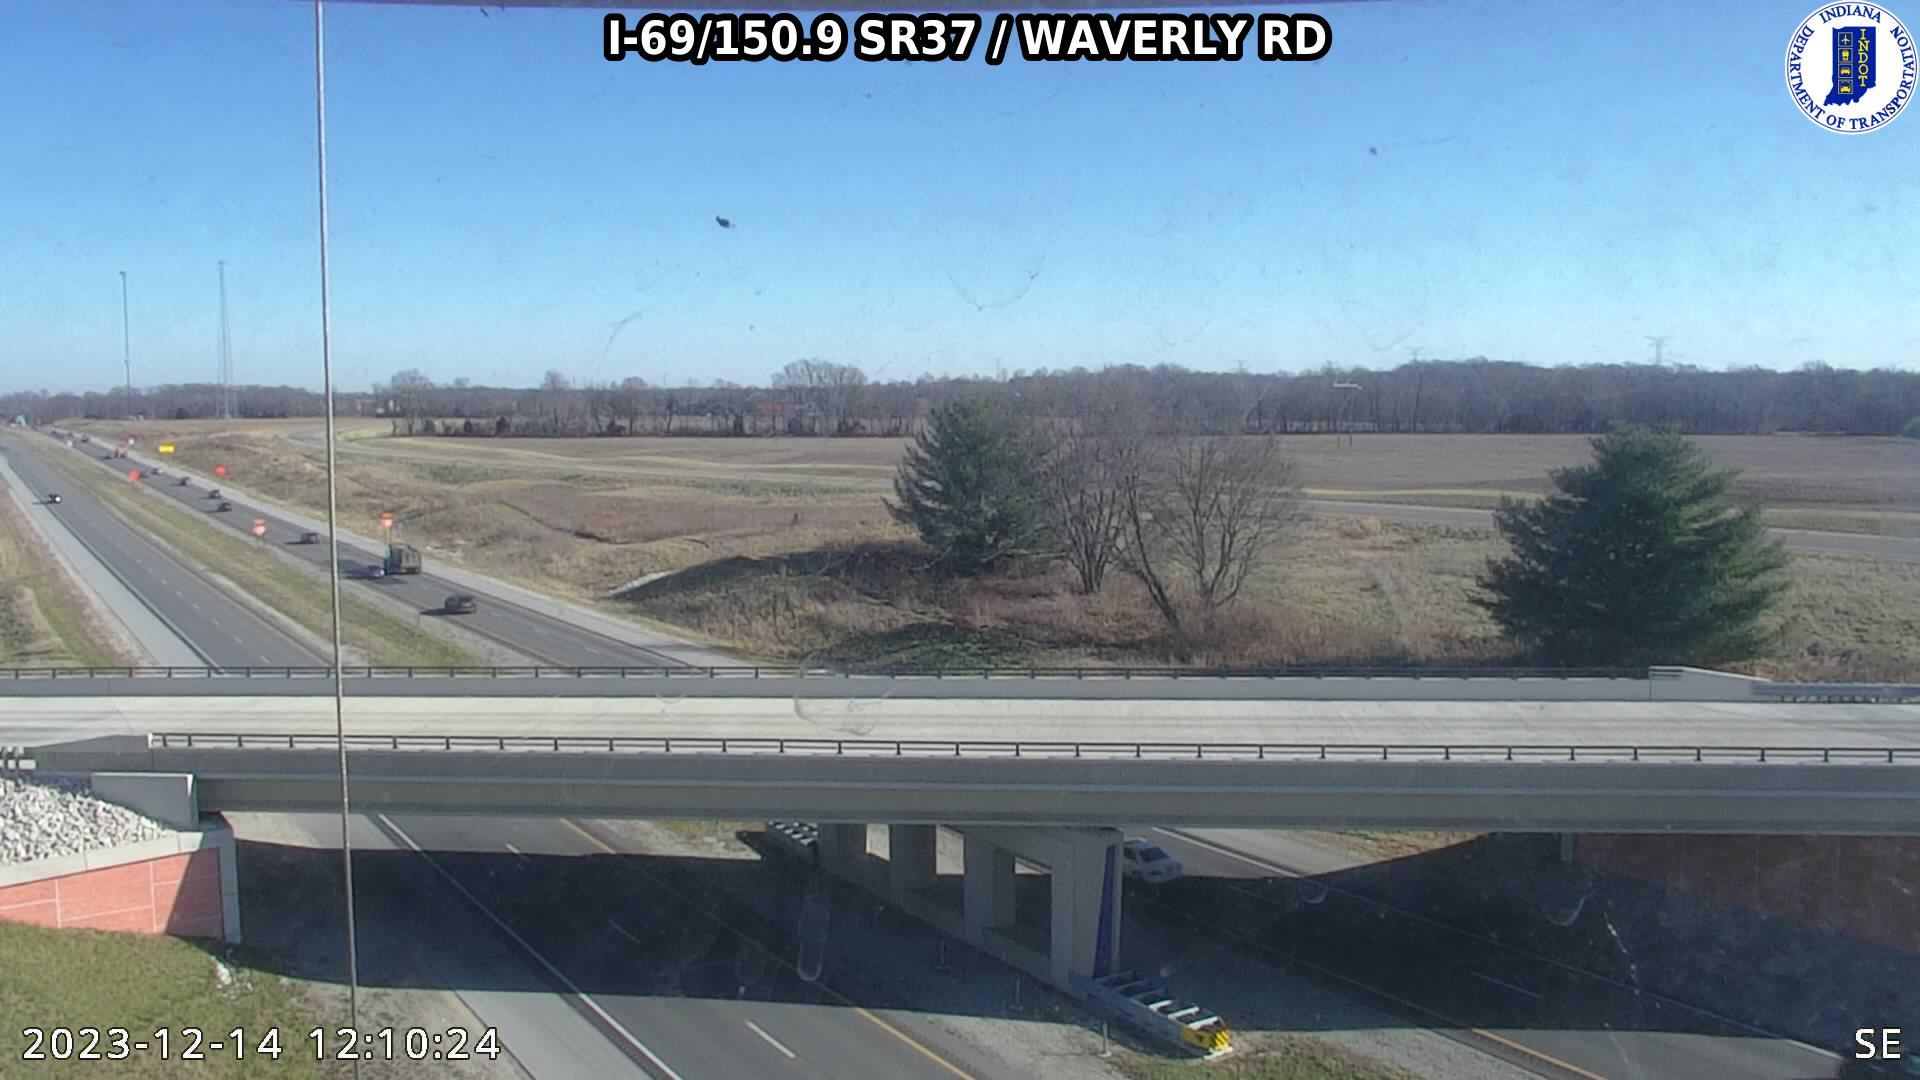 Traffic Cam Waverly Woods: I-69: I-69/150.9 SR37 - WAVERLY RD: I-69/150.9 SR37 - WAVERLY RD Player